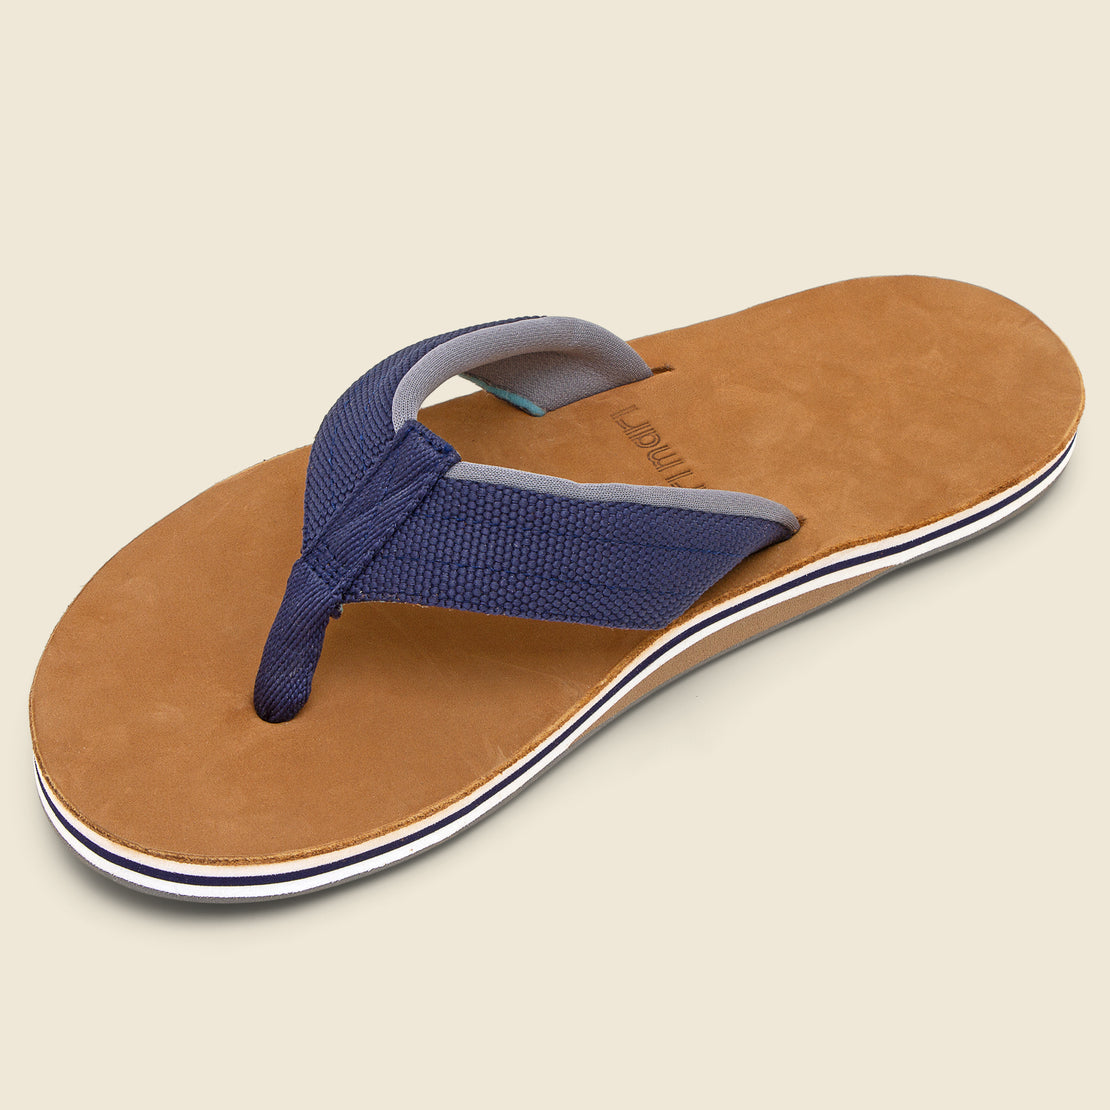 Scout Flip Flop - Indigo/Grey - Hari Mari - STAG Provisions - Shoes - Sandals / Flops